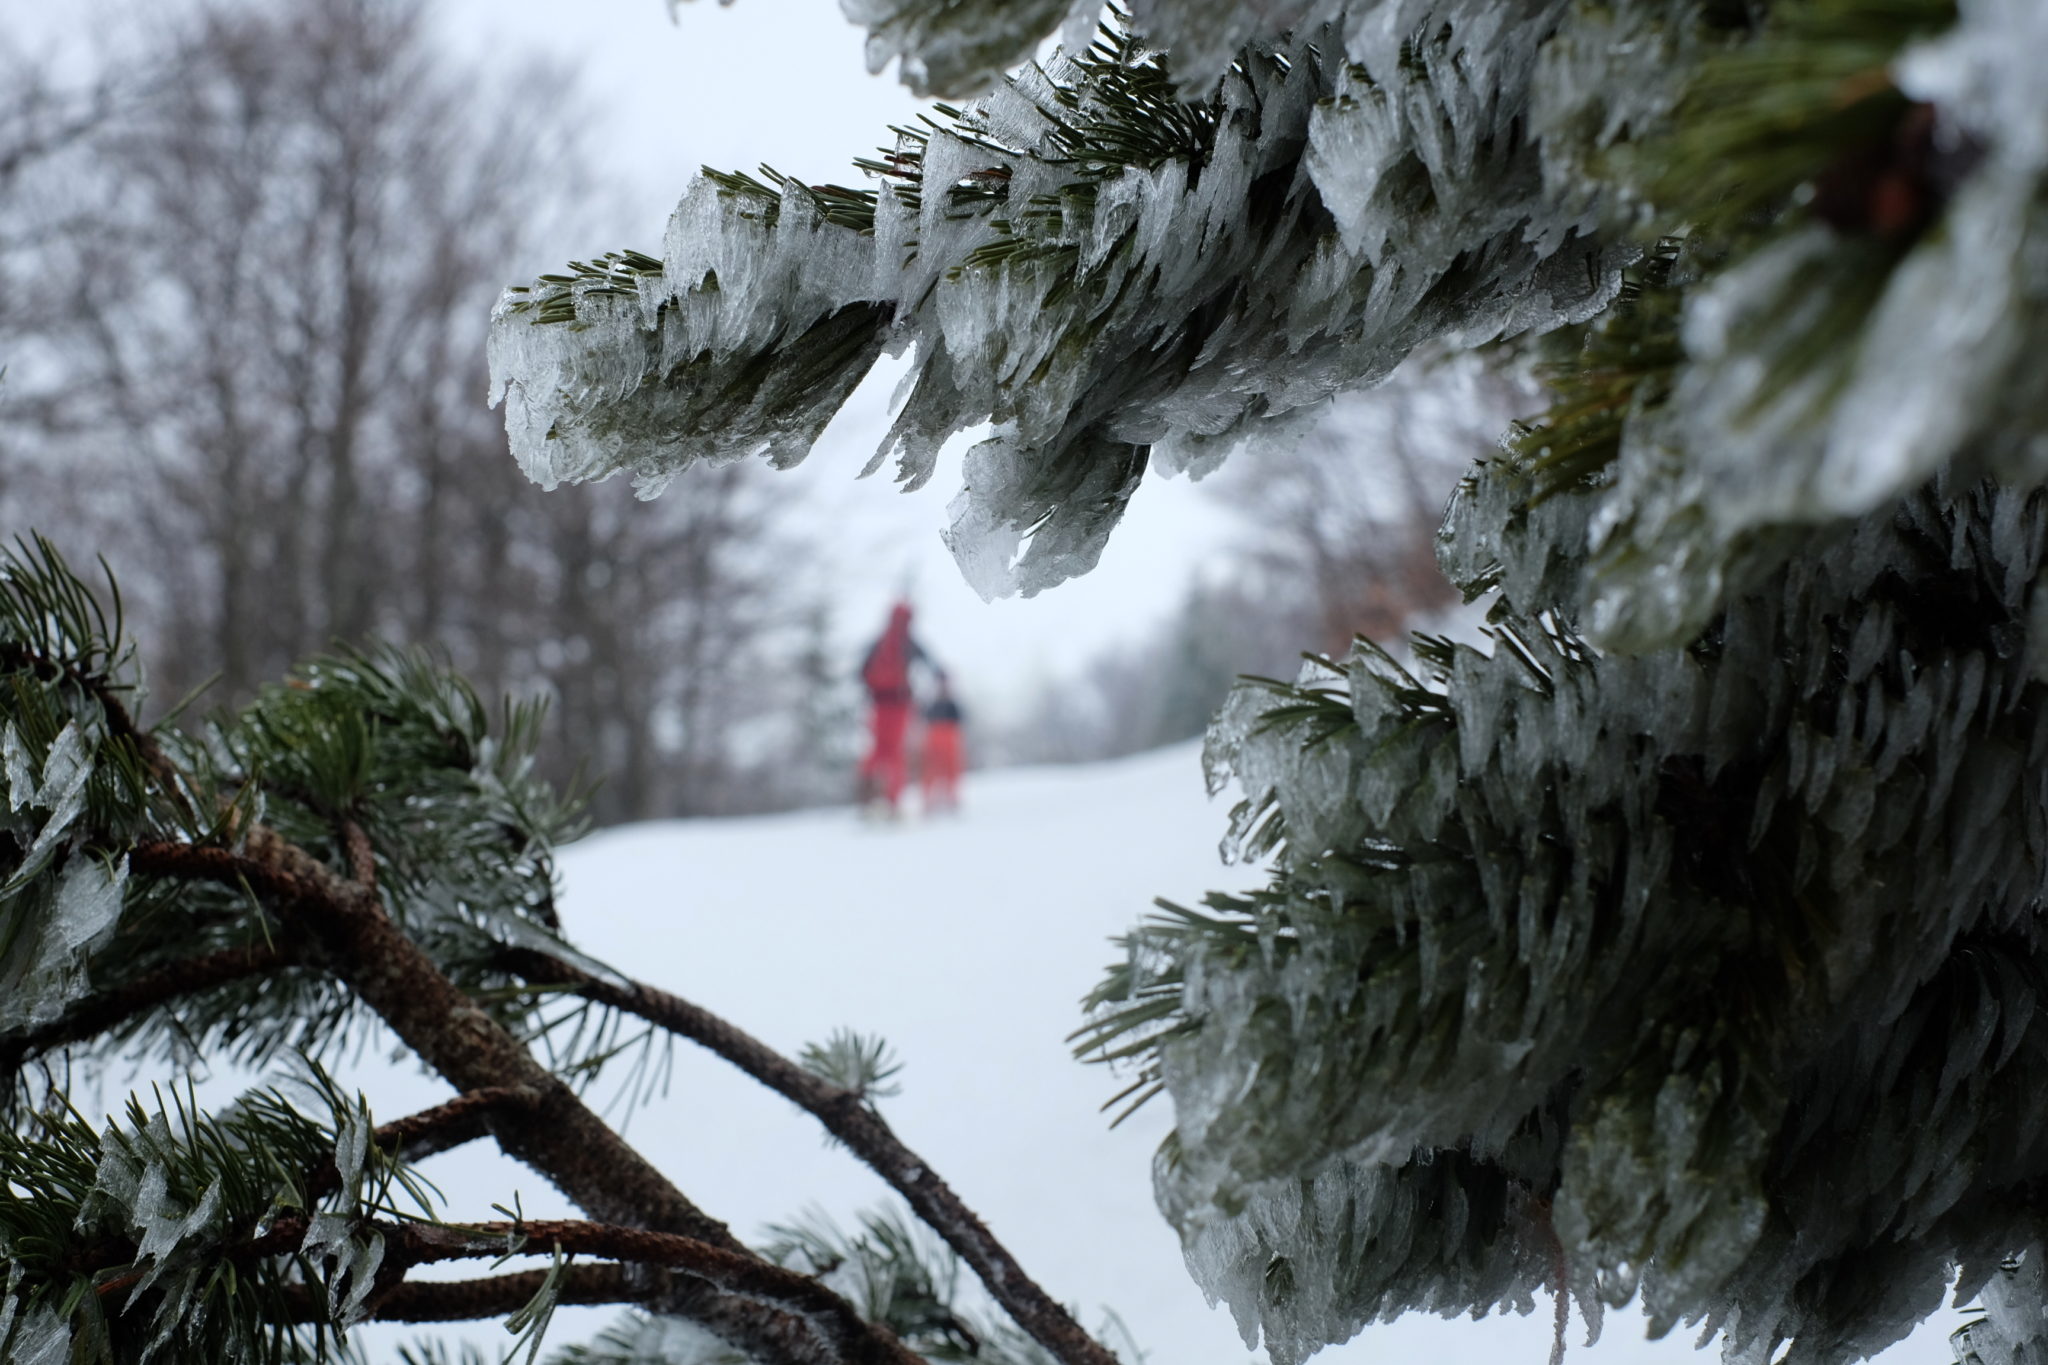 Snežnik in winter, ice, frozen trees, Slovenia